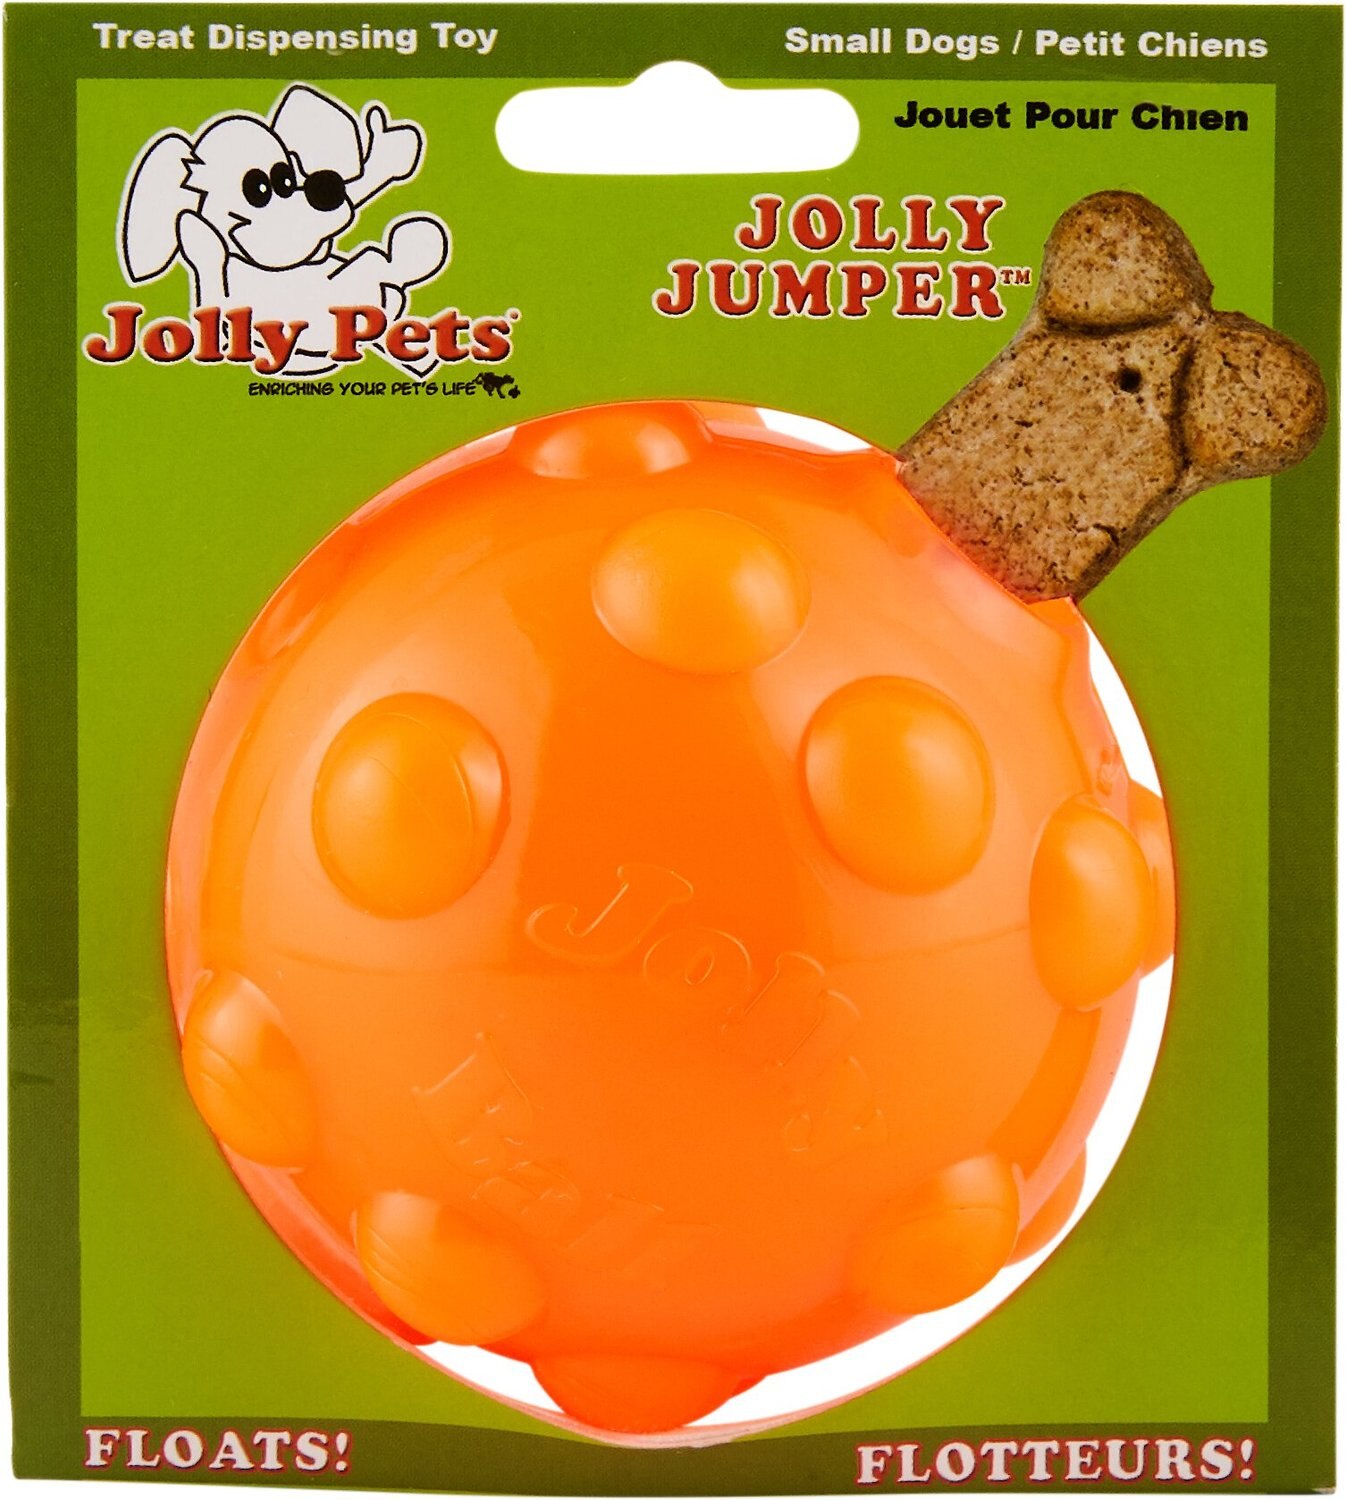 orange ball for dogs